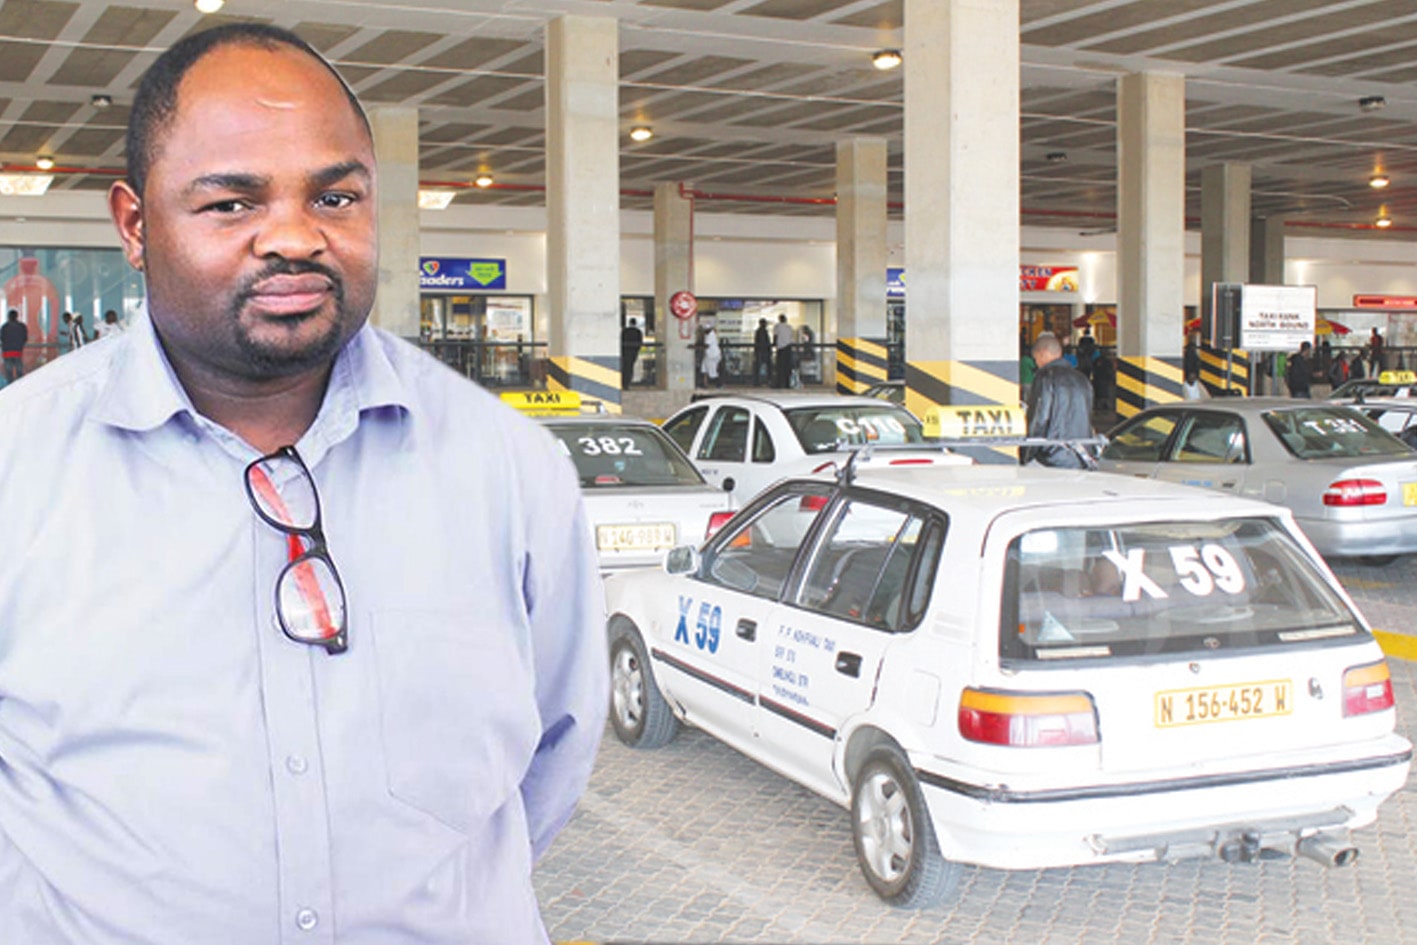 Taxi union pushes for N$26 per trip despite backlash